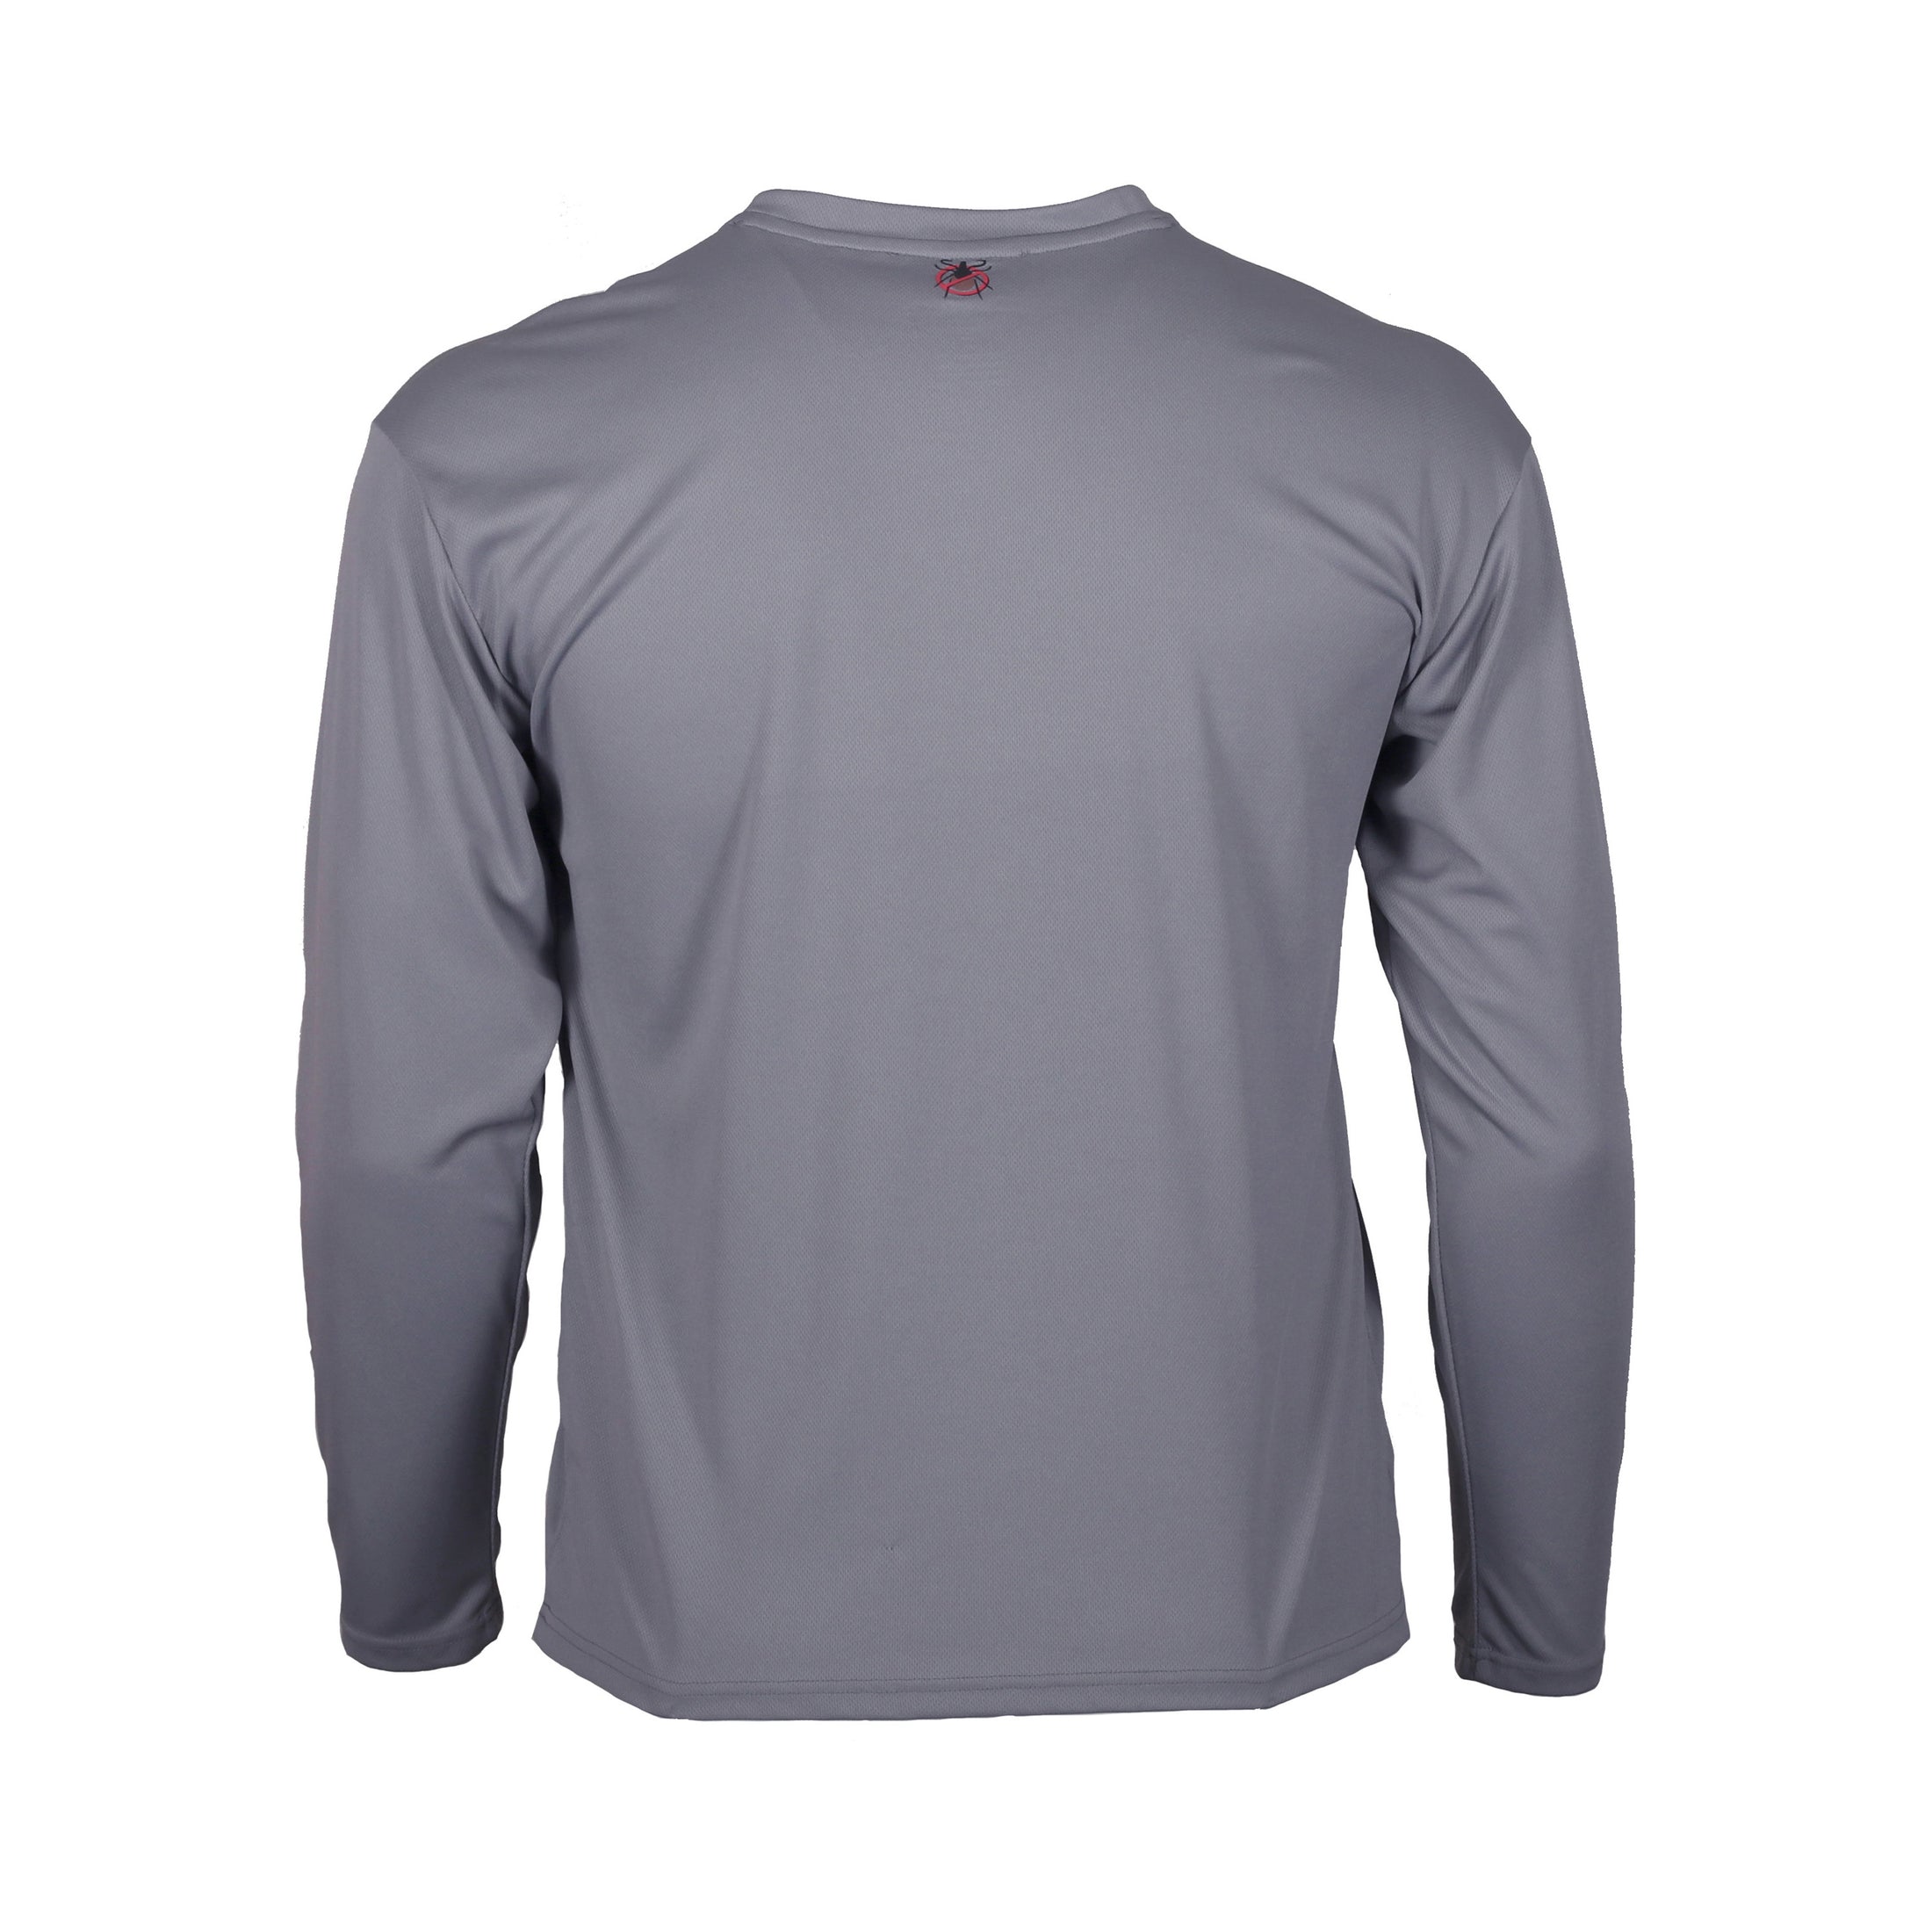 gamehide ElimiTick Long Sleeve Tech Shirt back (grey)